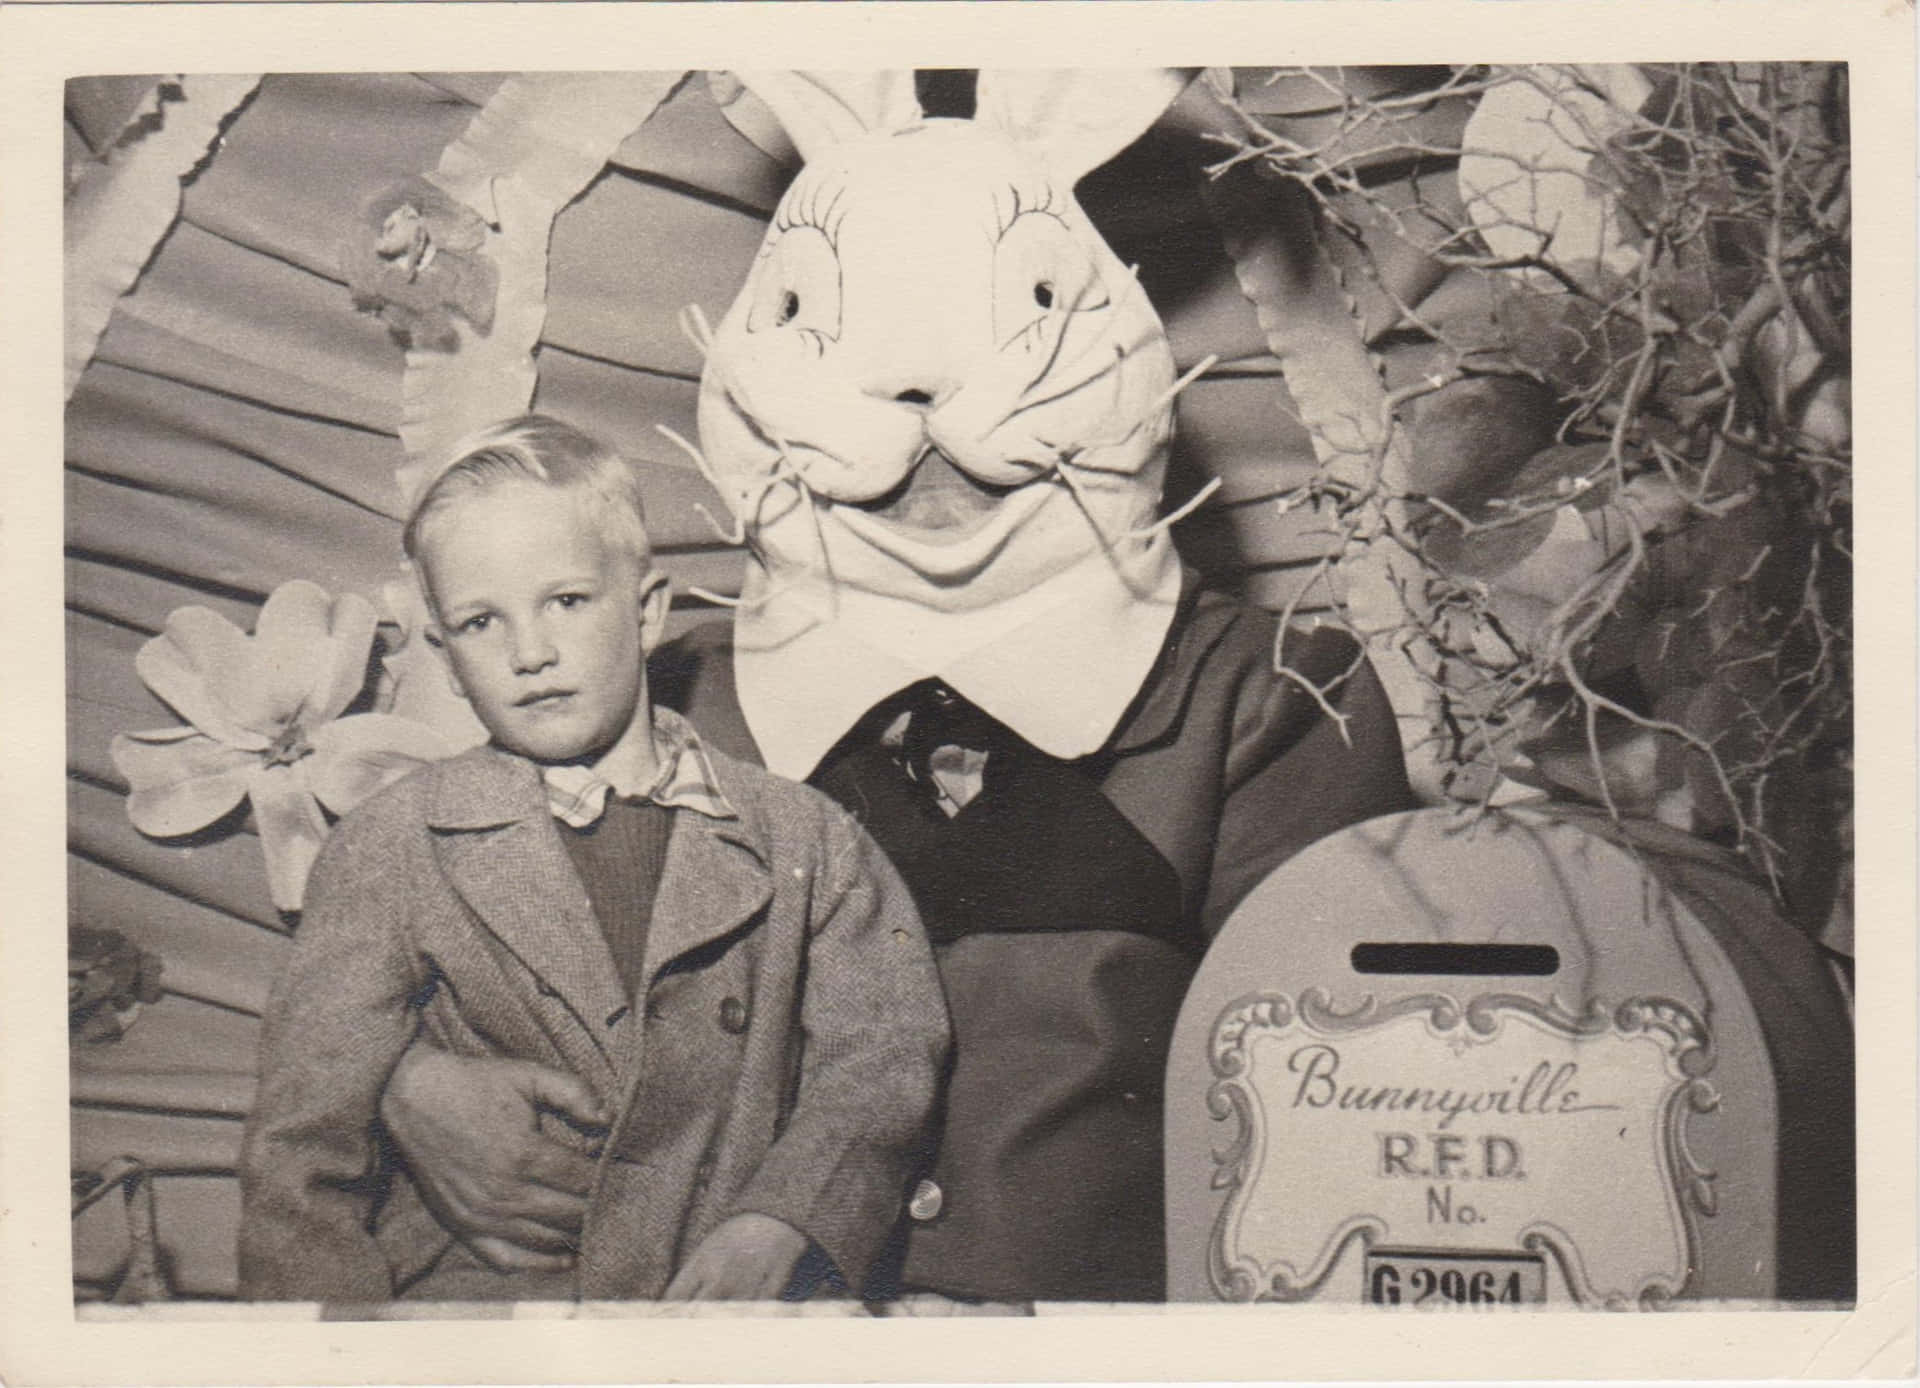 The Creepy Easter Bunny